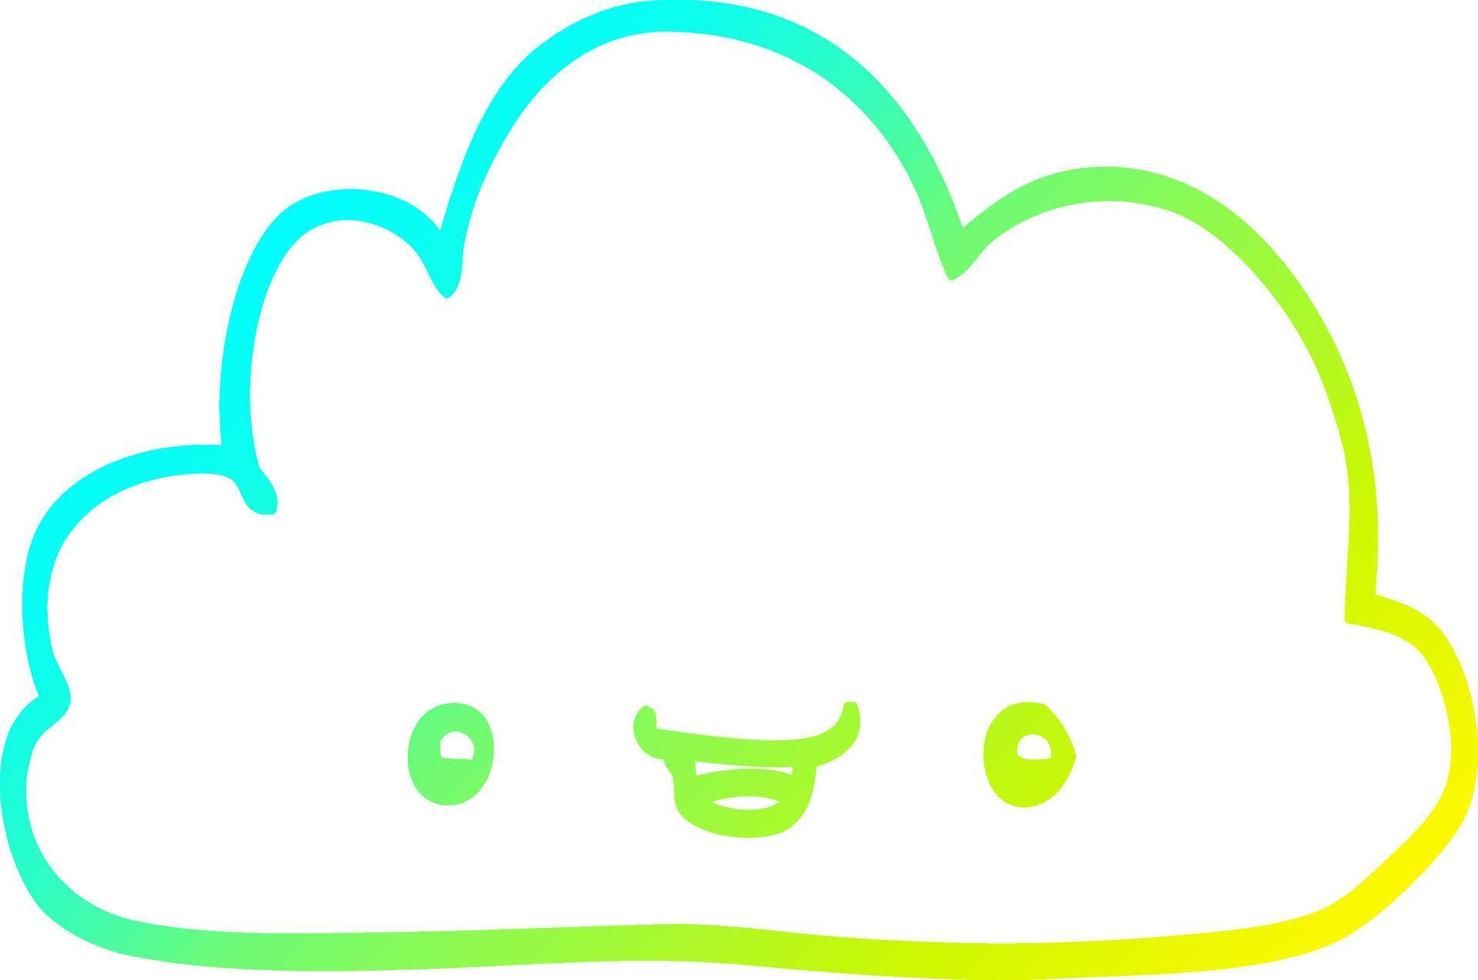 cold gradient line drawing happy cartoon cloud vector